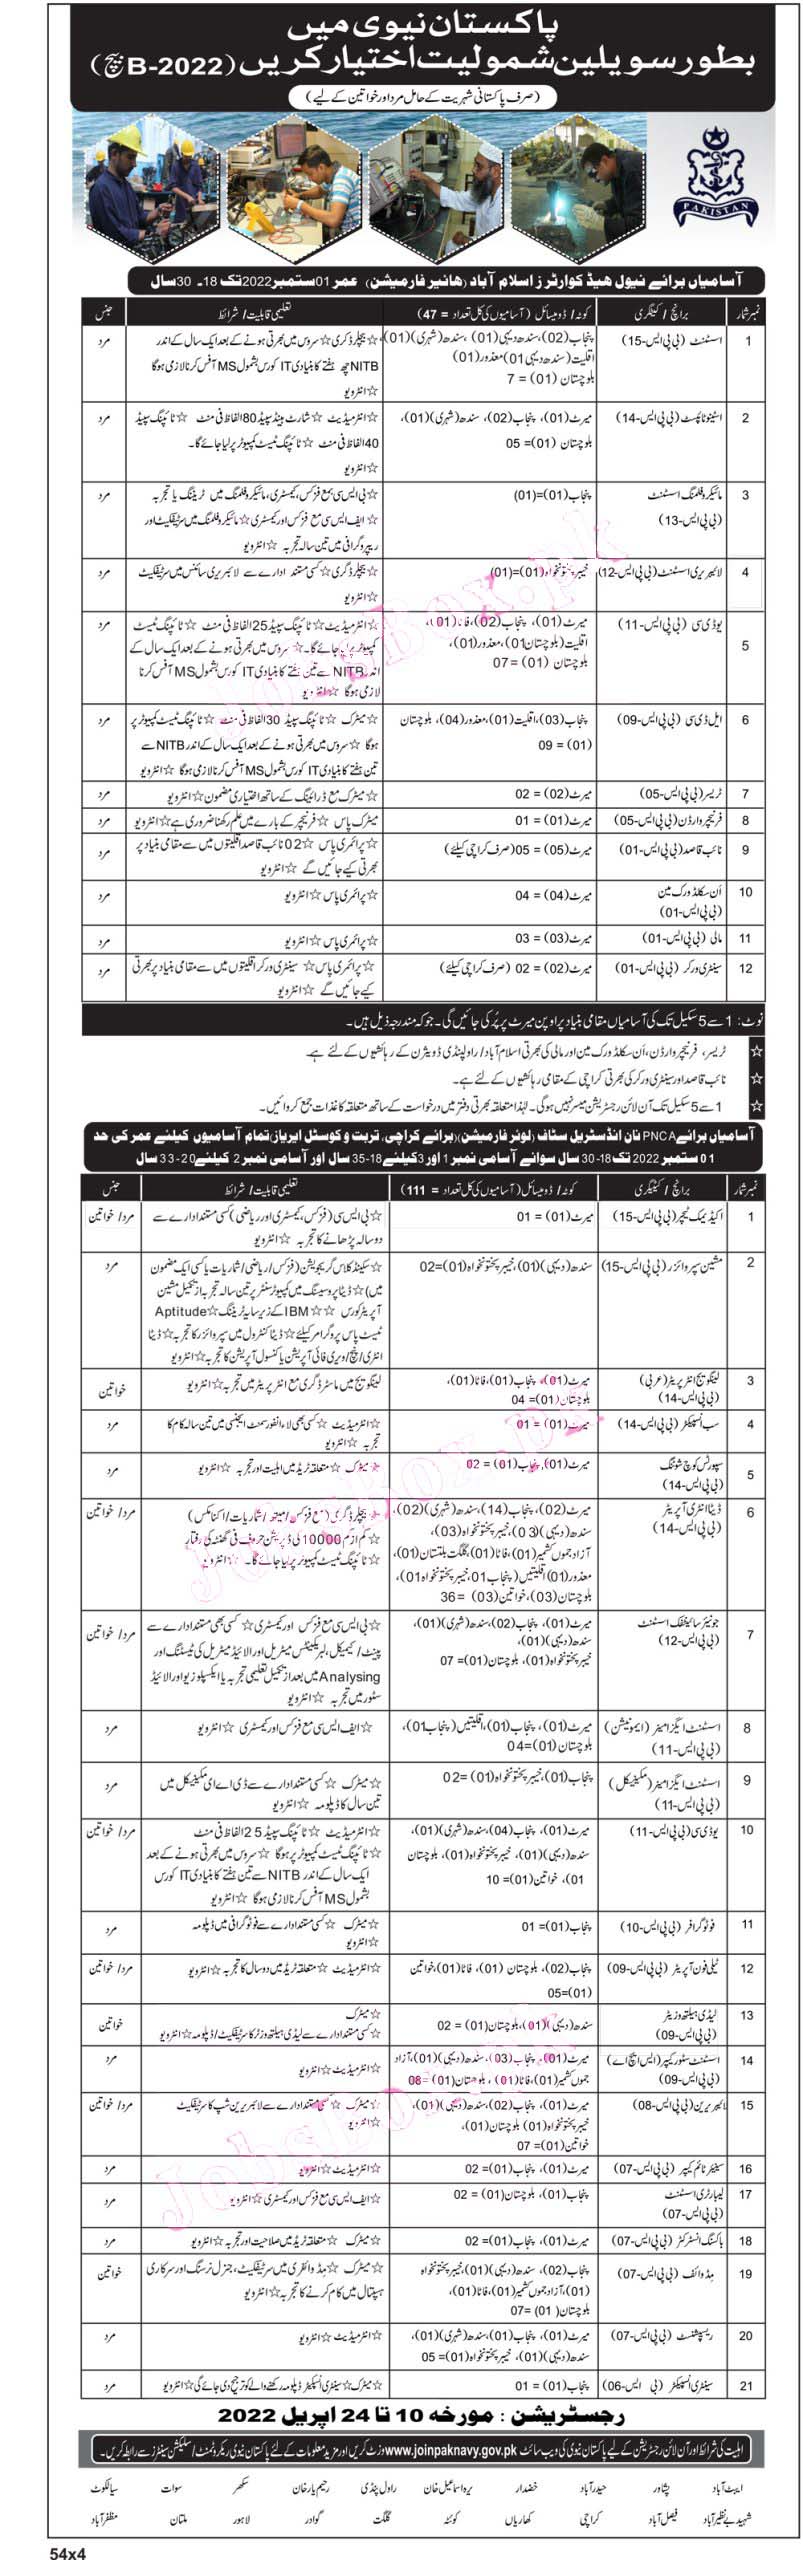 Pak Navy Civilian Jobs 2022 Online Registration at www.joinpaknavy.gov.pk